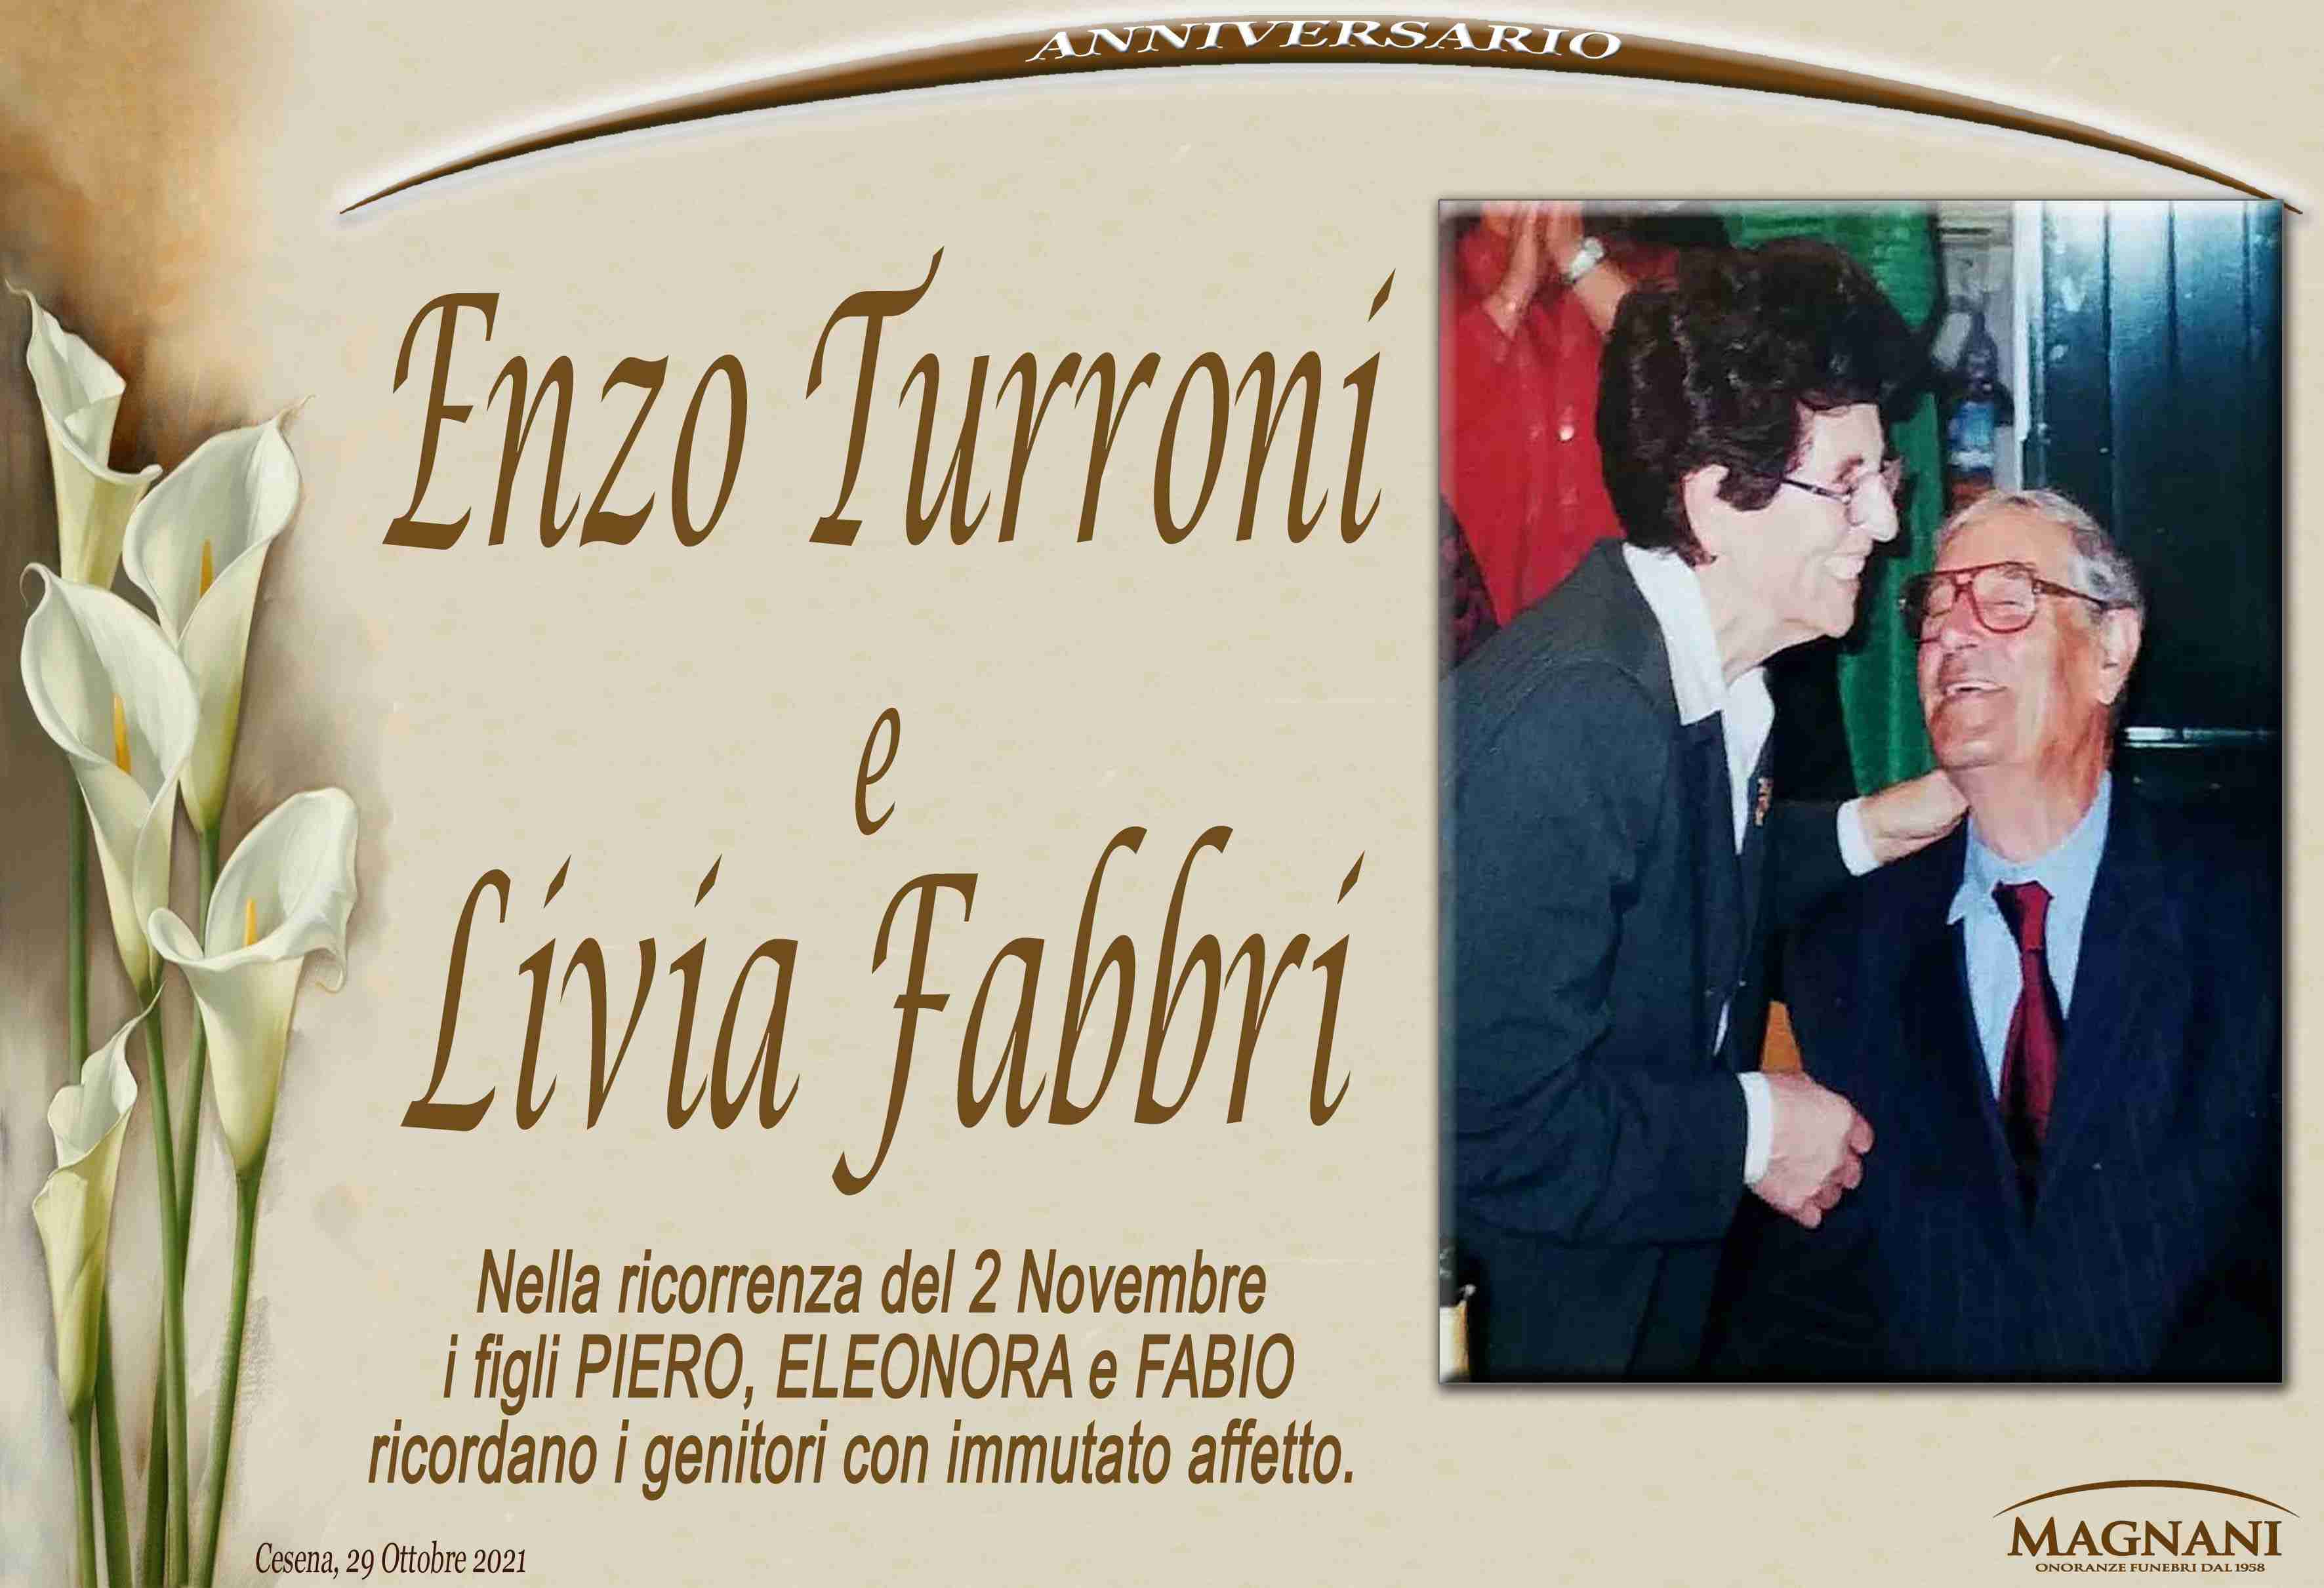 Coniugi Enzo Turroni e Livia Fabbri